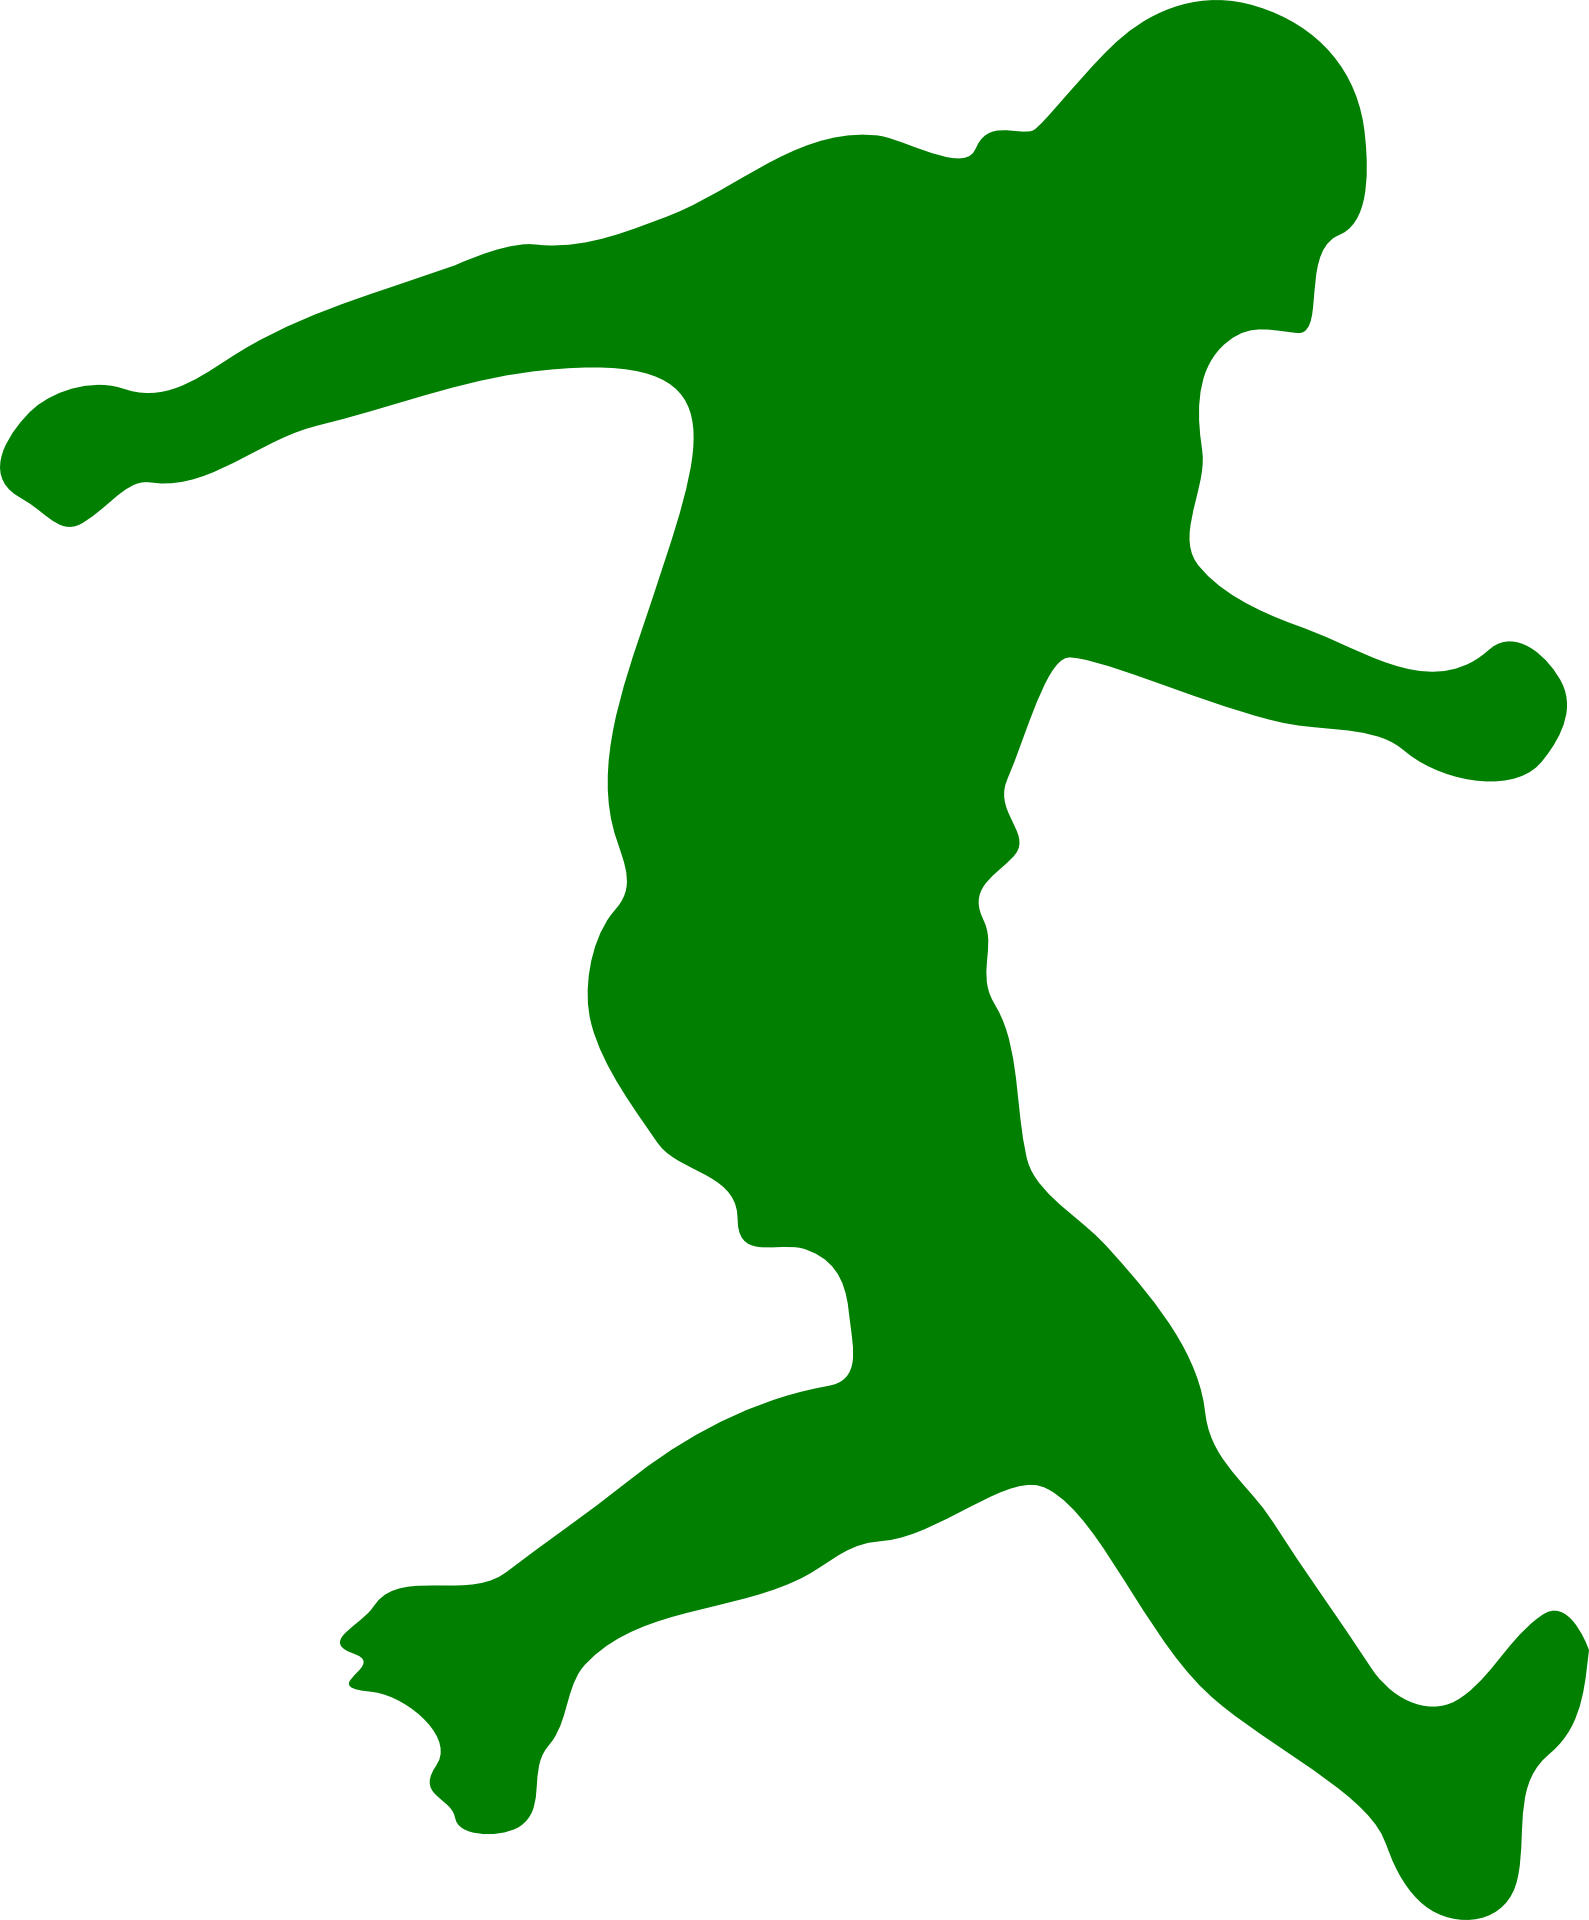 Football Player Silhouette Clip Art - Soccer Player Silhouette - Png Download (1589x1920), Png Download